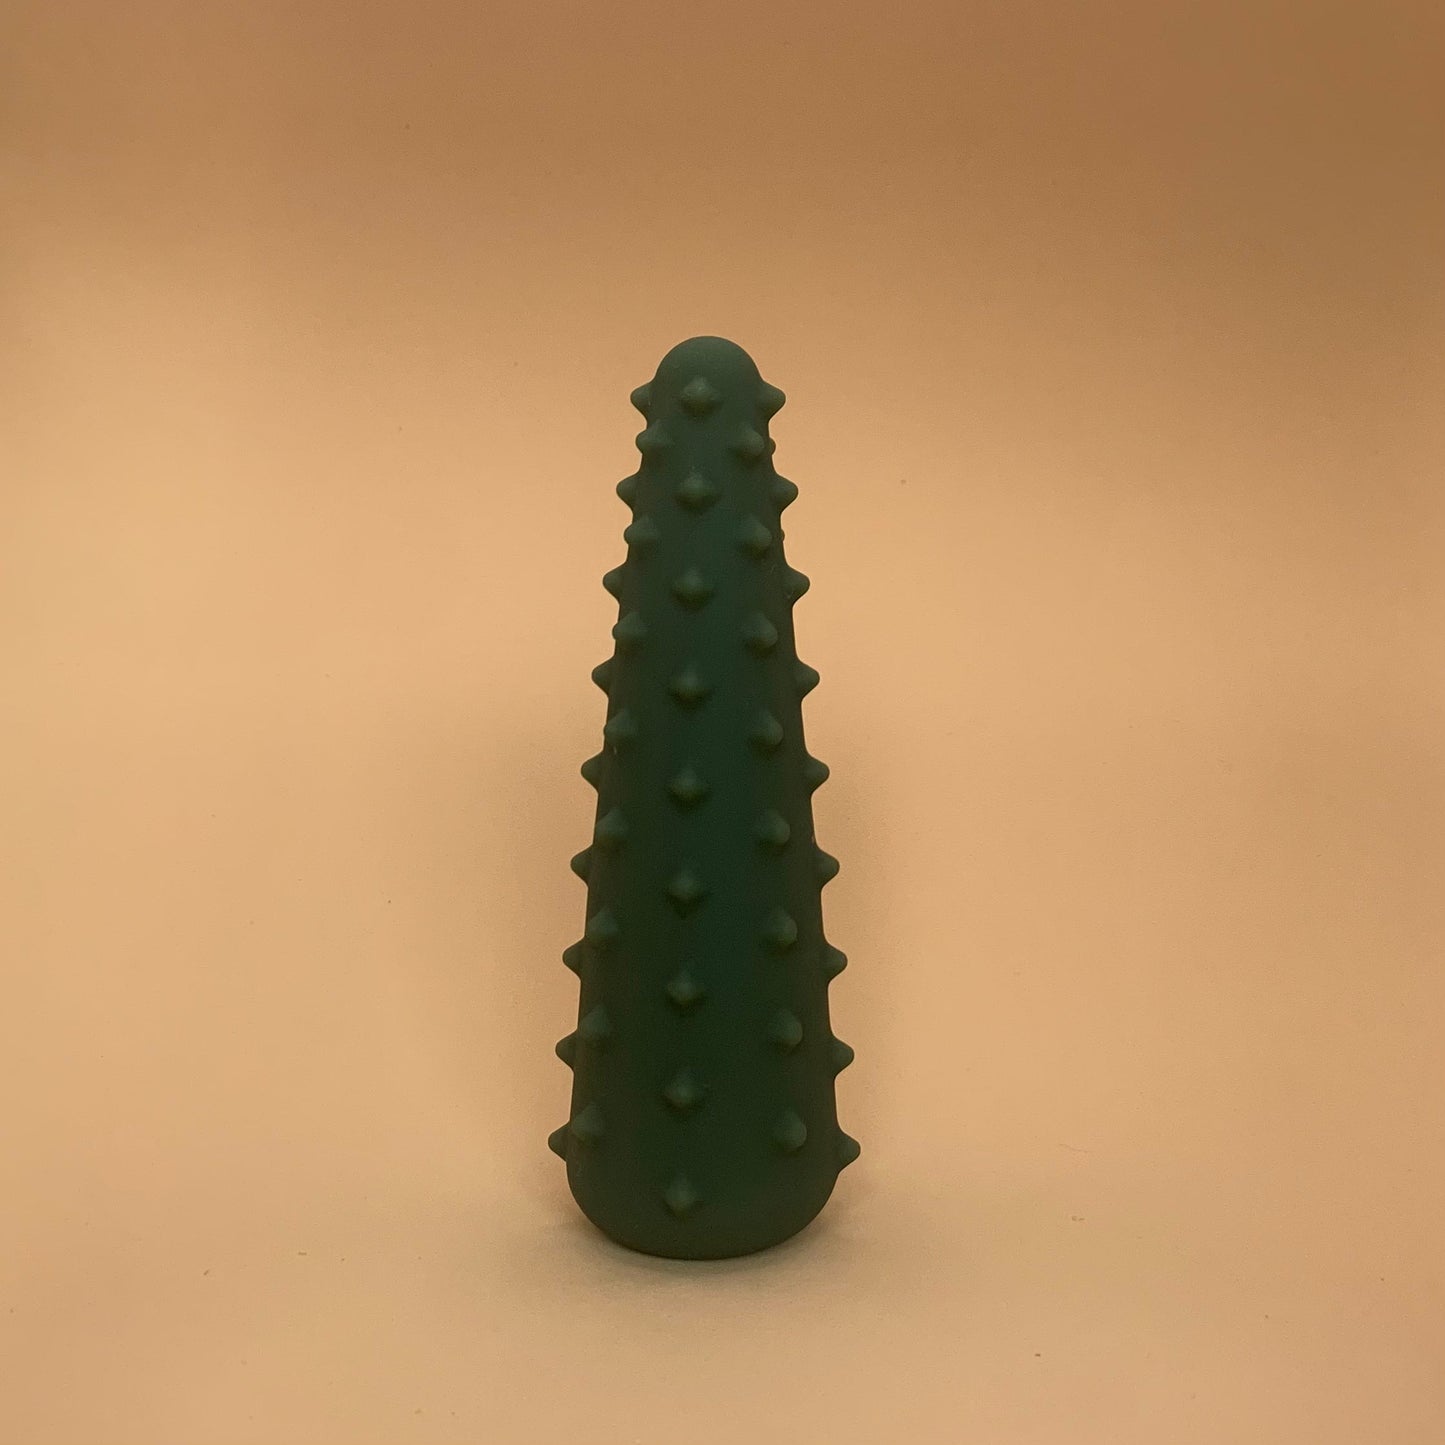 cone shaped cactus-like vibrating dildo standing